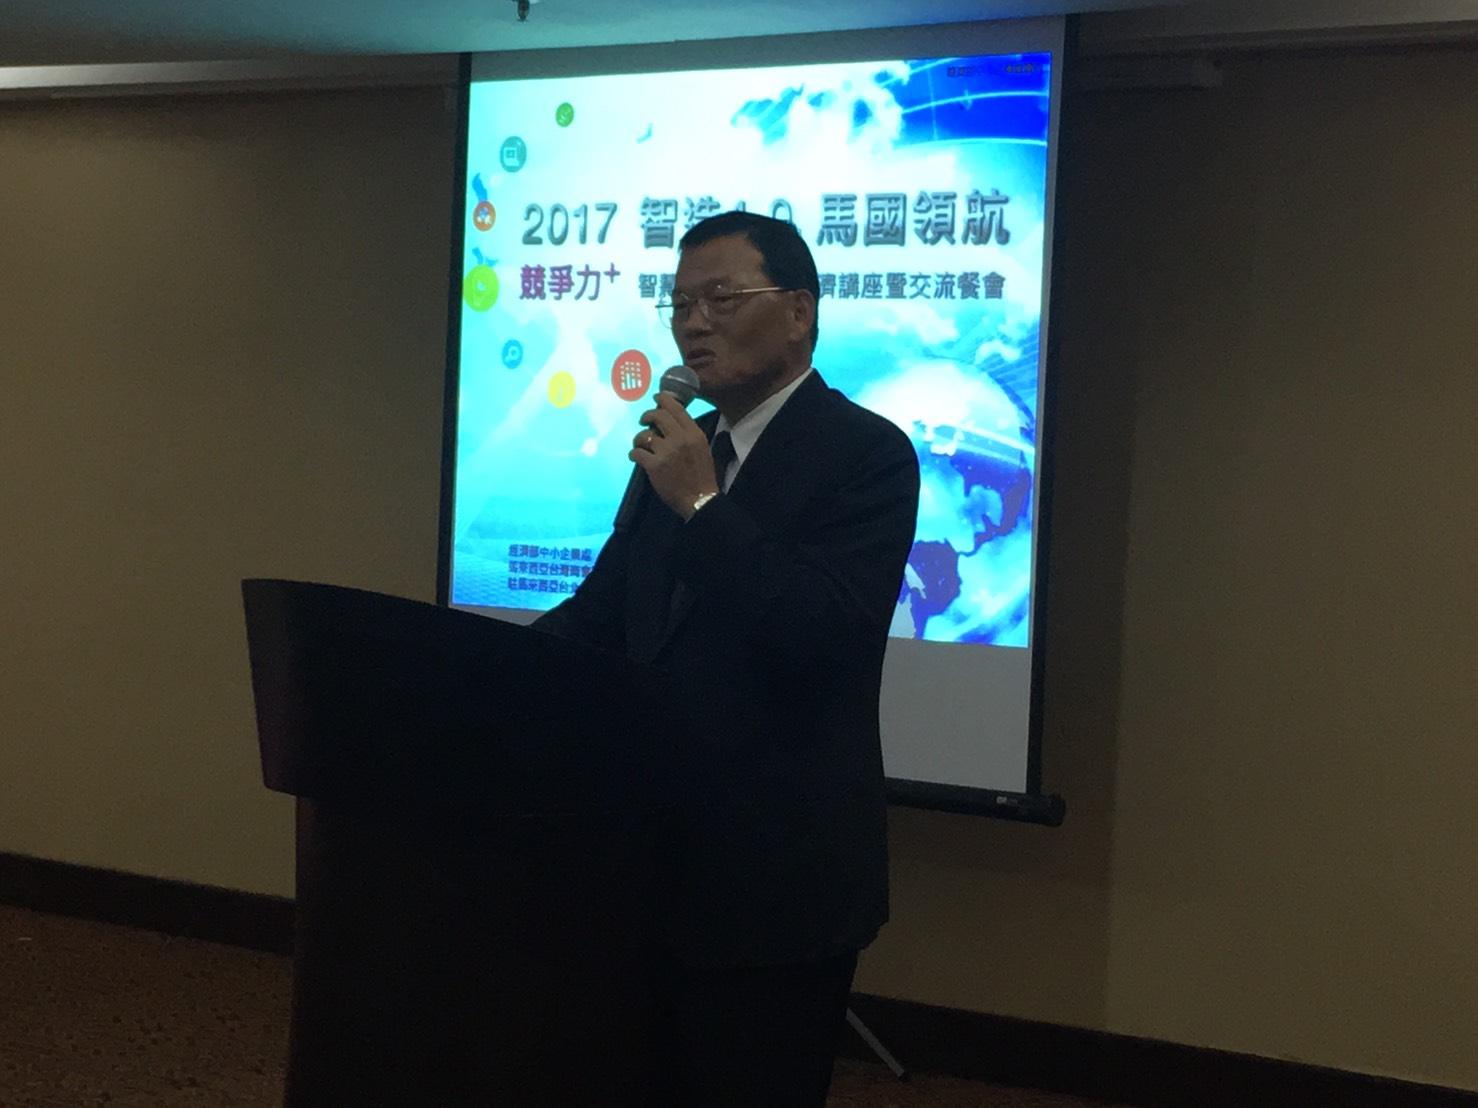  Wakil Chang, James Chi-ping menghadiri “2017 Smart Manufacturing and Circular Economy Seminar” di Kuala Lumpur pada 23 Mei, 2017